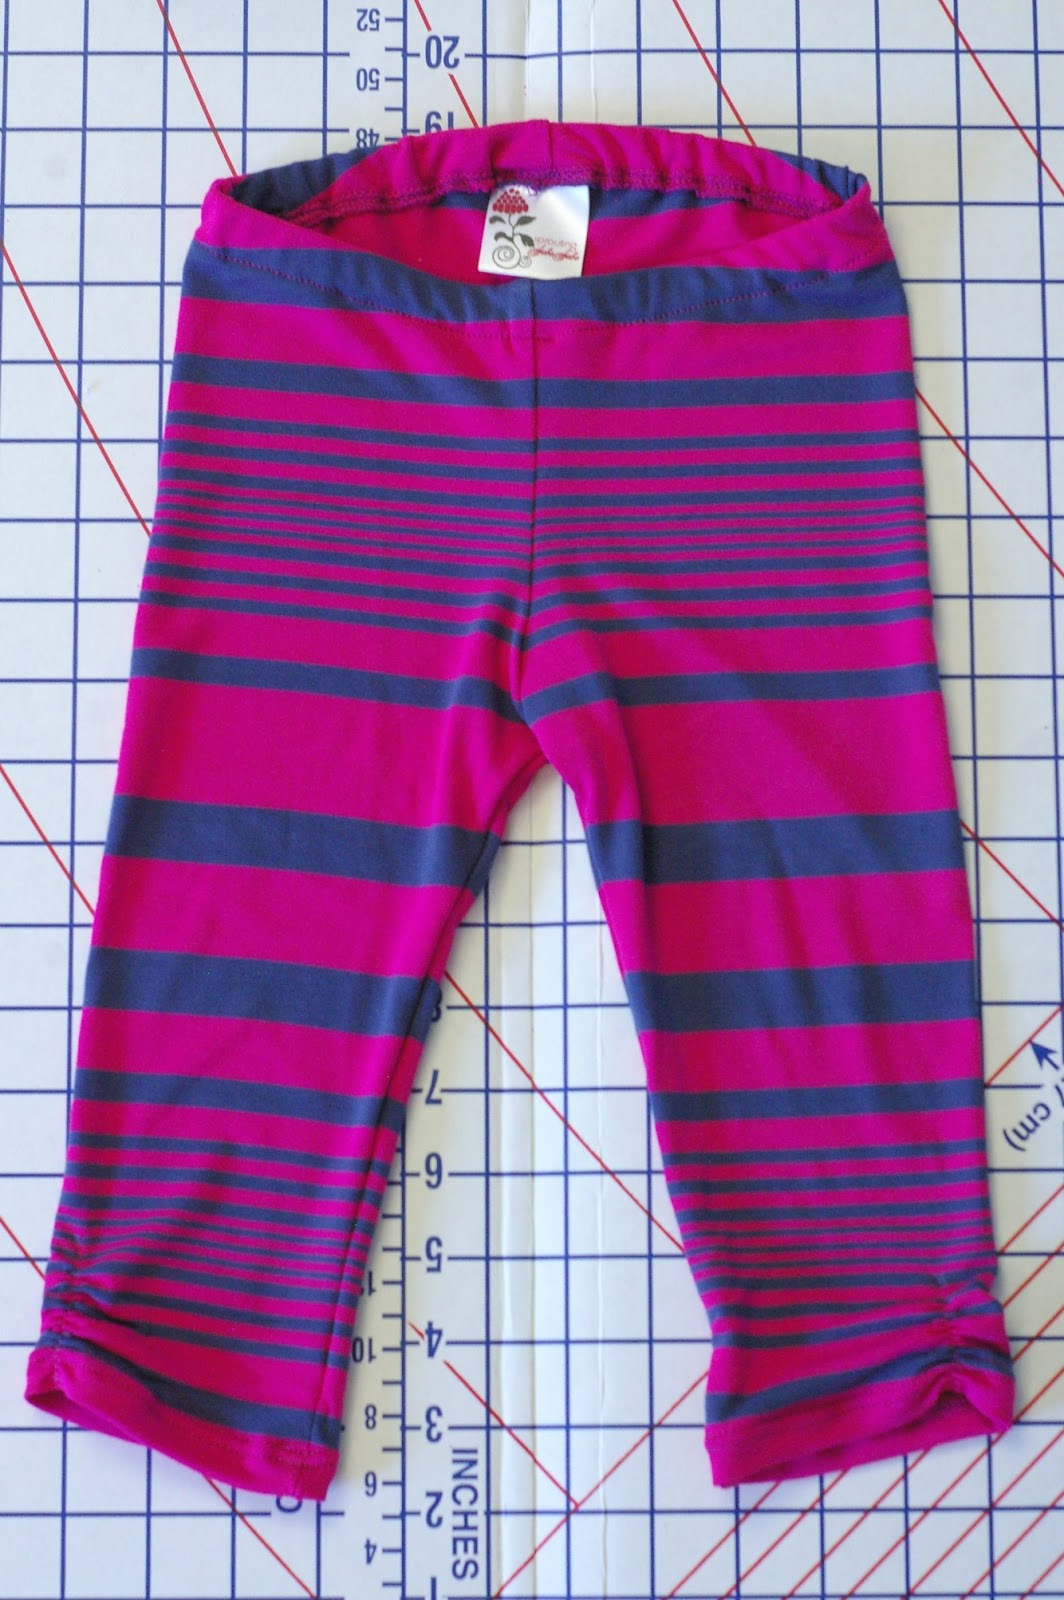 http://sproutingjj.blogspot.ca/2014/08/free-leggings-pattern-by-em-patterns.html